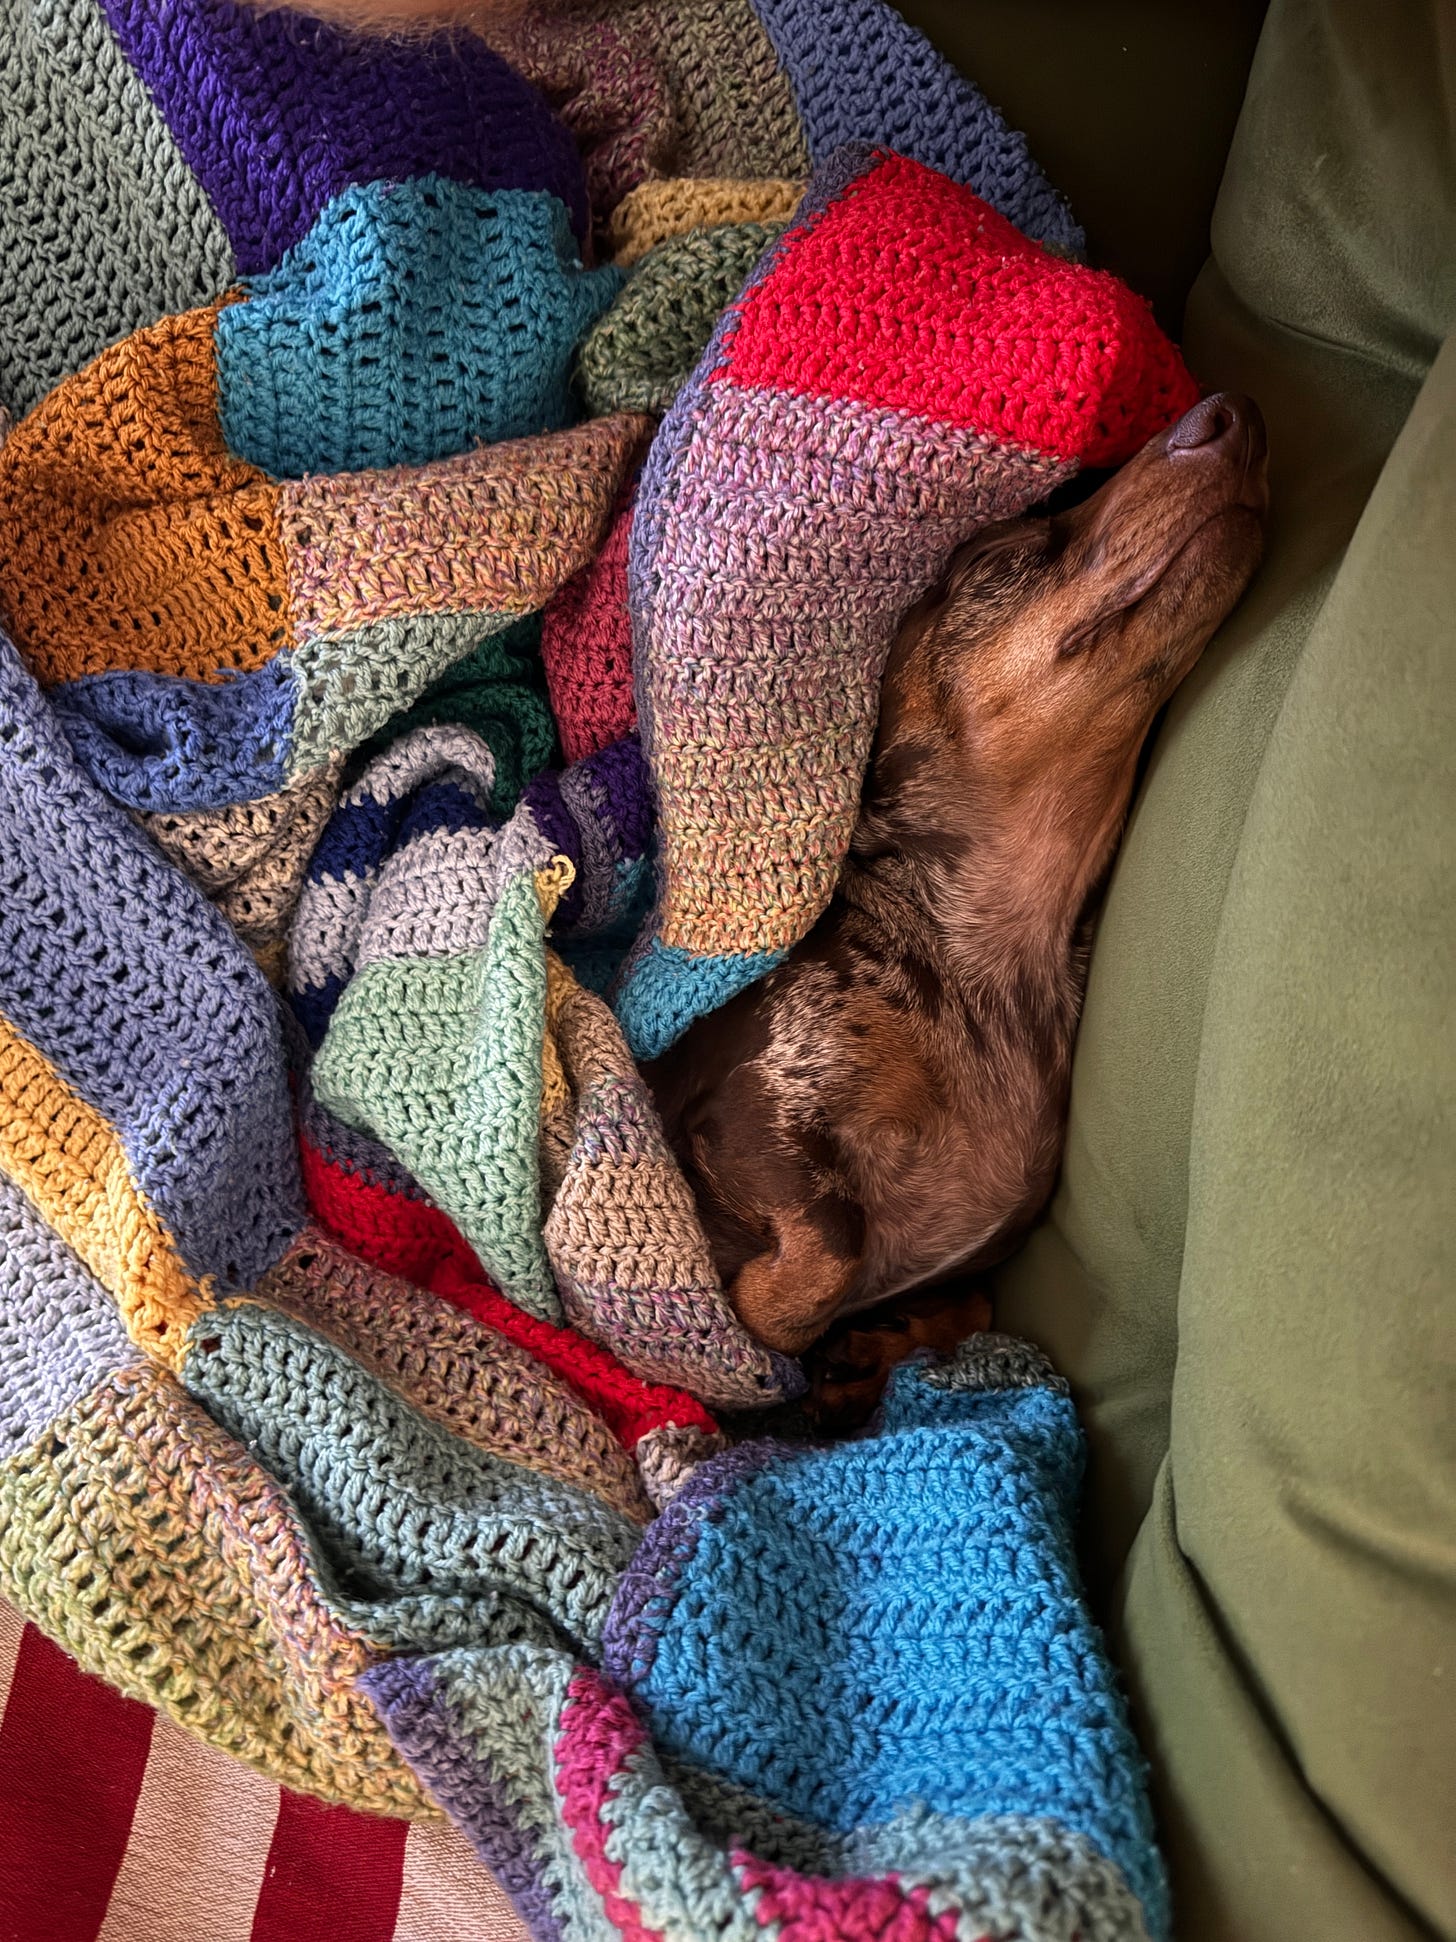 Dachshund wrapped in a rainbow blanket sleeping